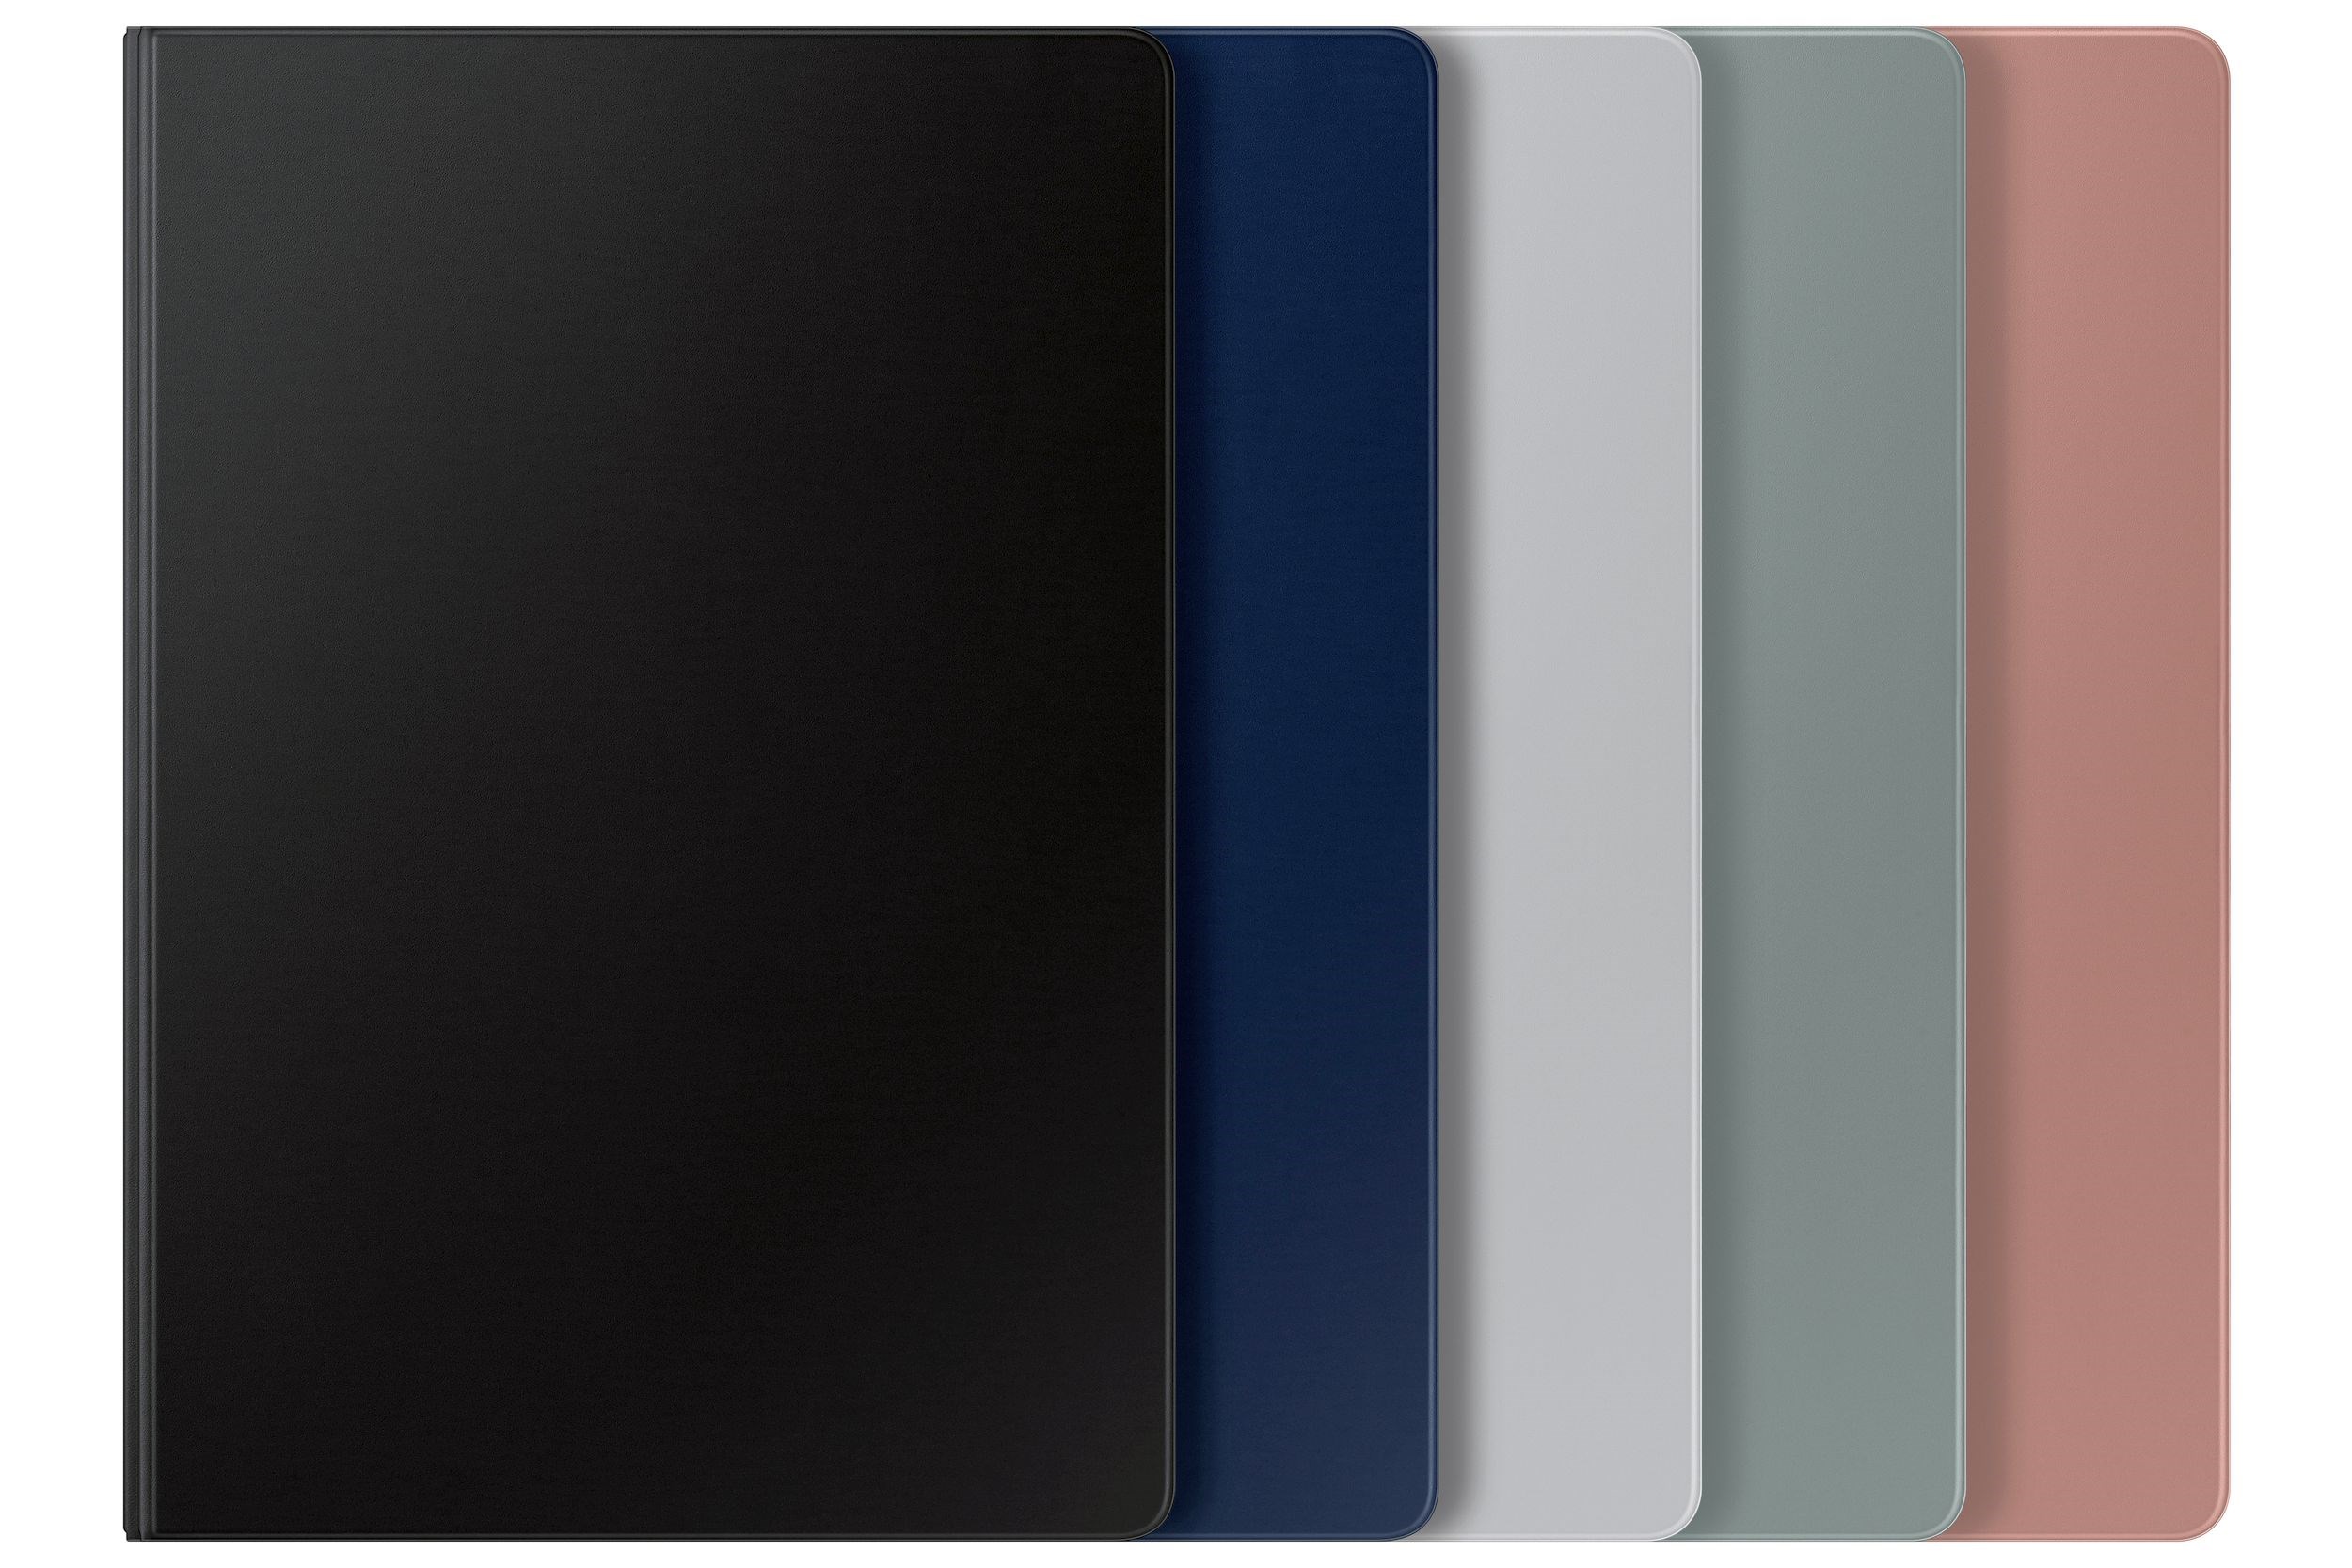 Samsung Galaxy Tab S7 Lite'ın yeni görüntüleri yayınlandı